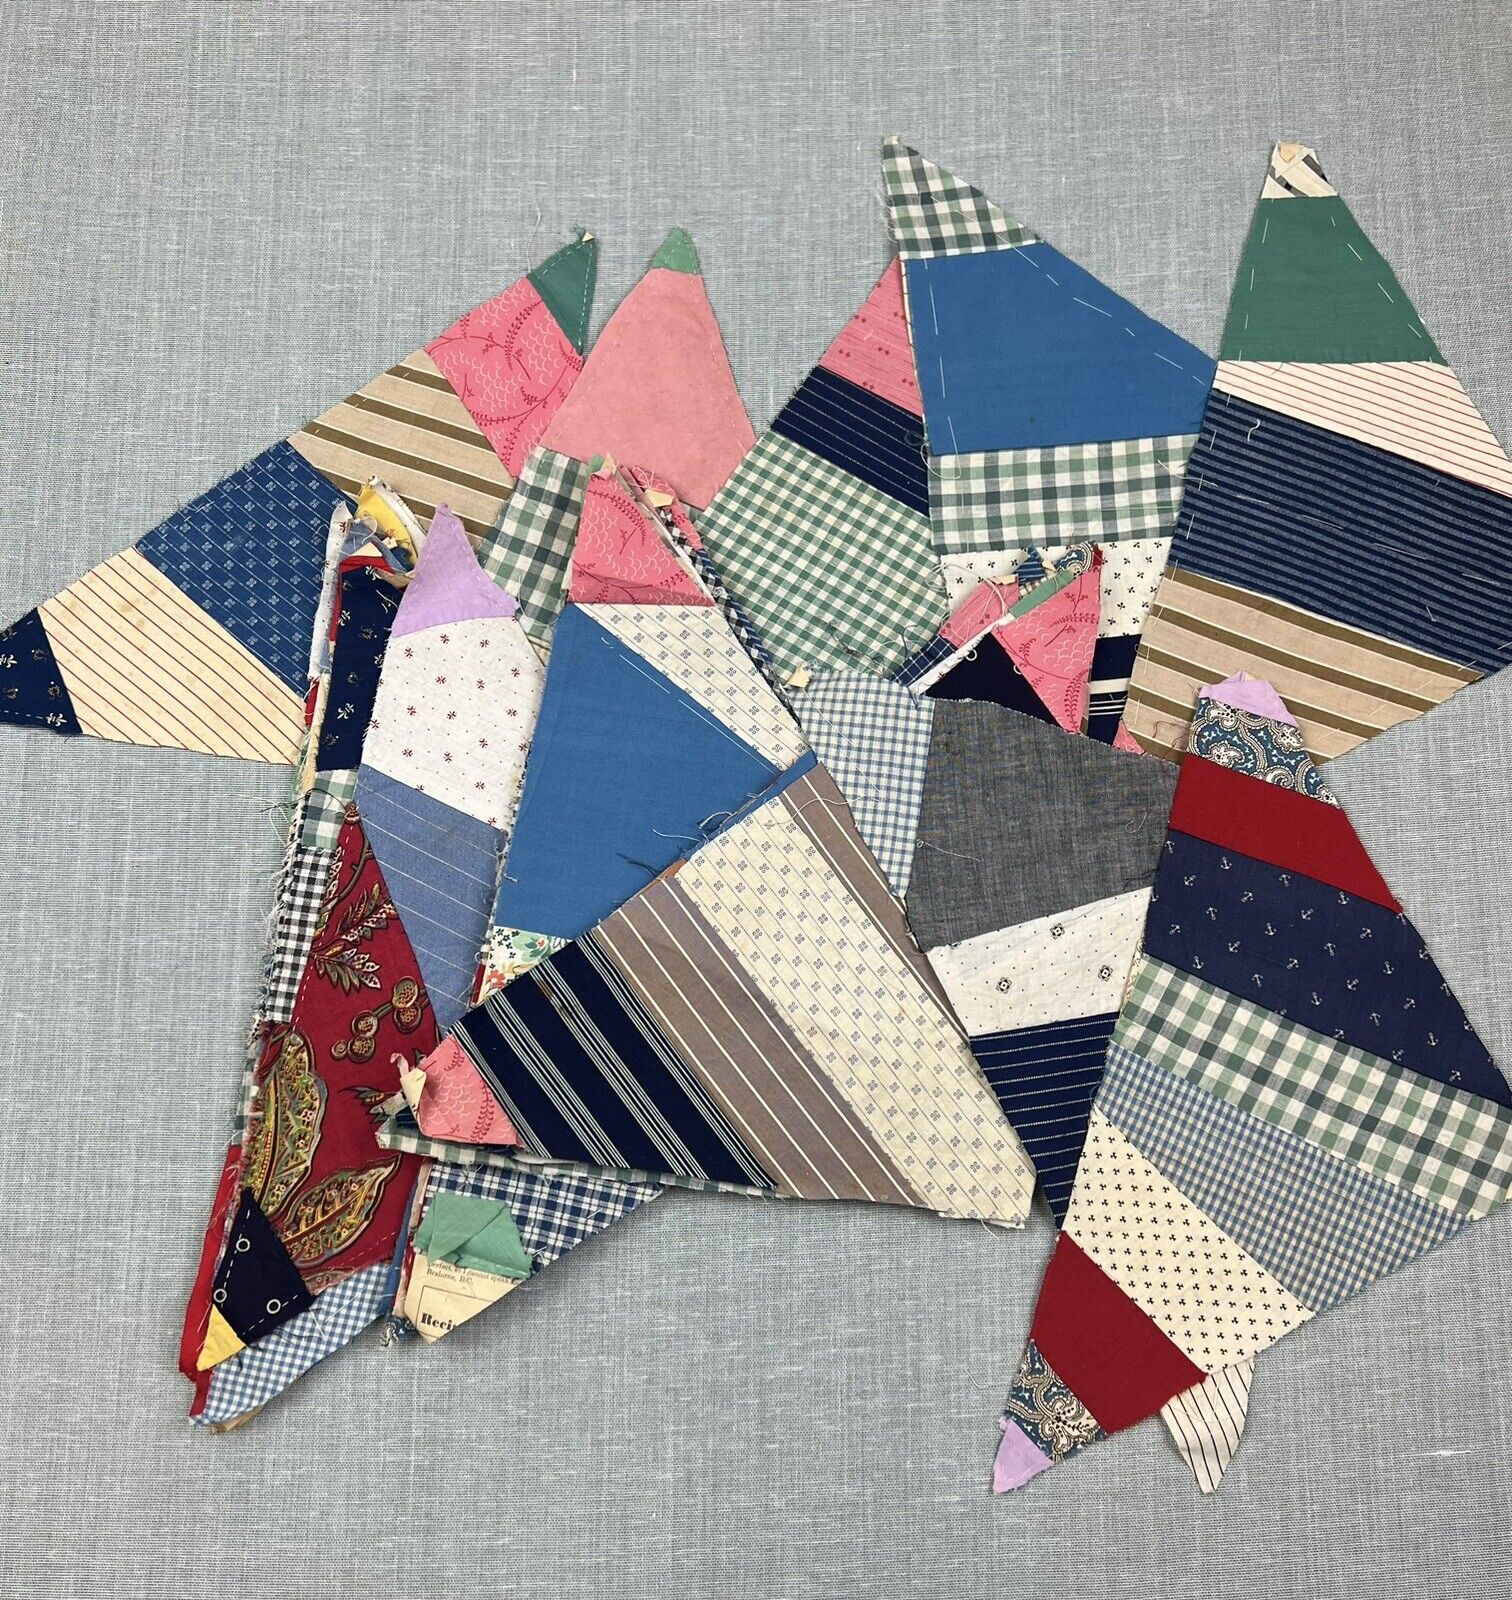 VTG 1930s Lot 37 Pcs Assorted Print Stitched Quilt Pieces Crafts DIY Triangles